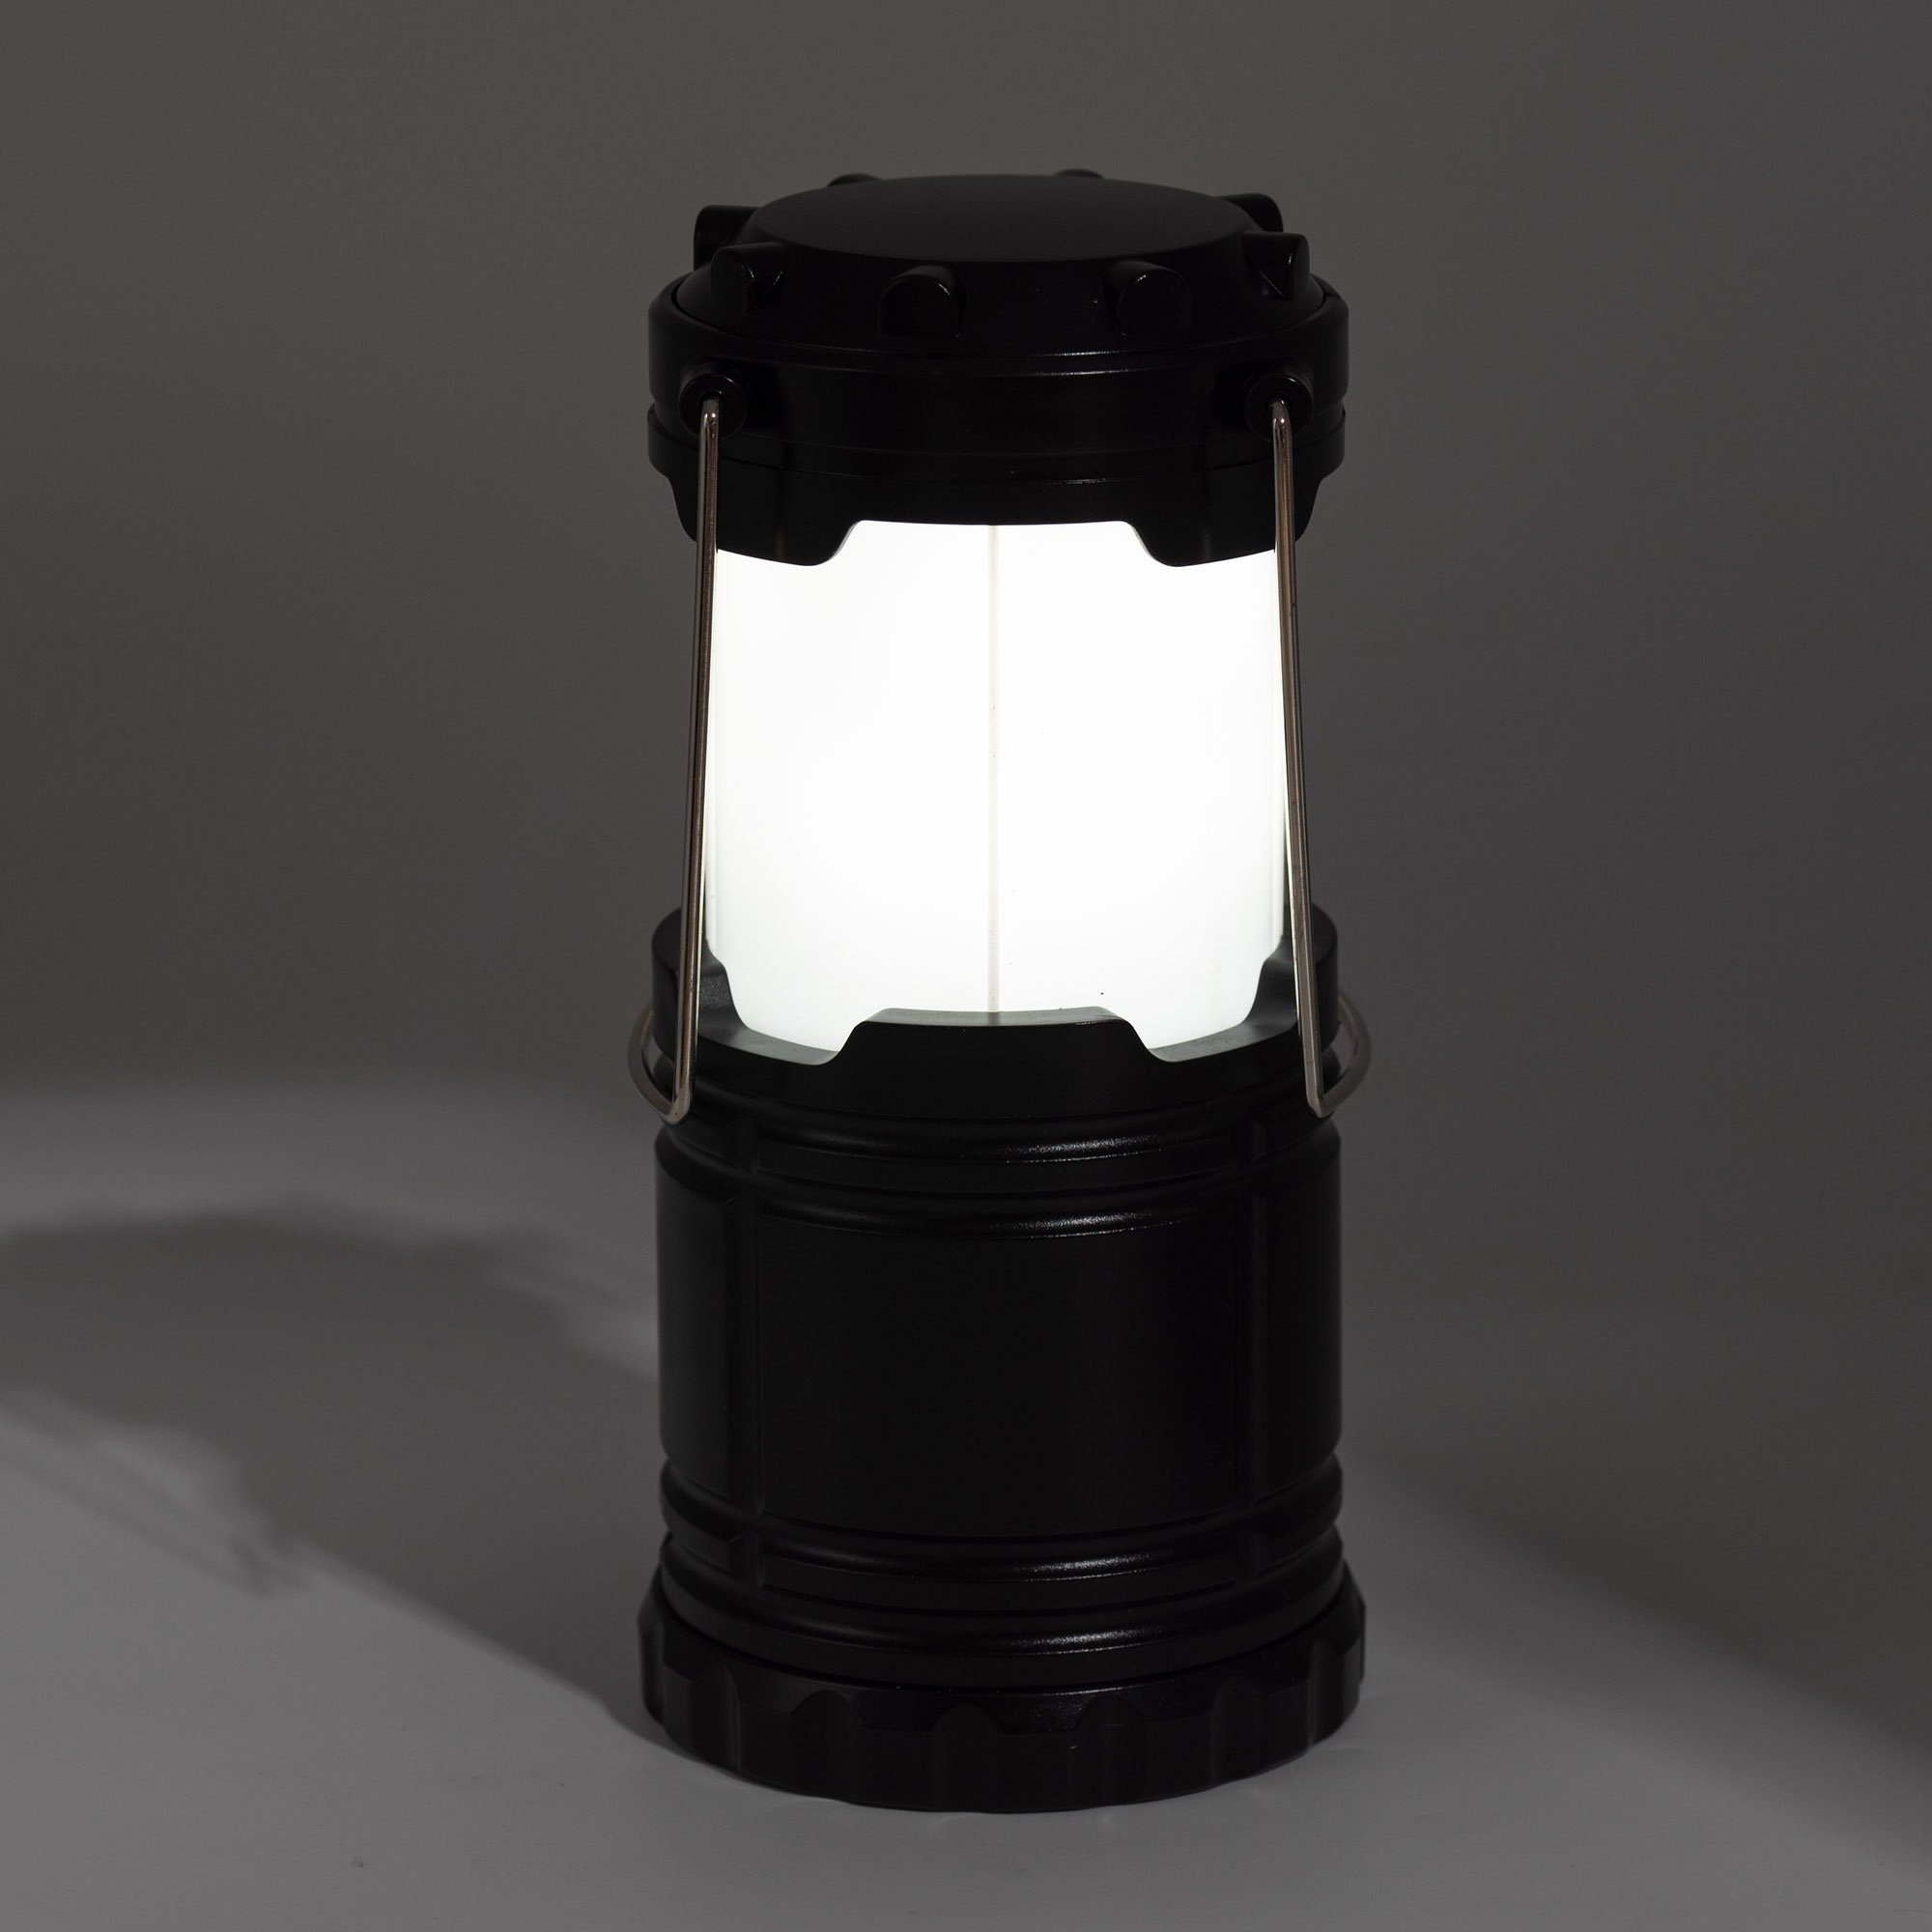 Laterne, Zelt Garten, Lampe Batterie, LED Flammen, Effekt Taschenlampe BENSON Leuchte Campinglampe 2in1